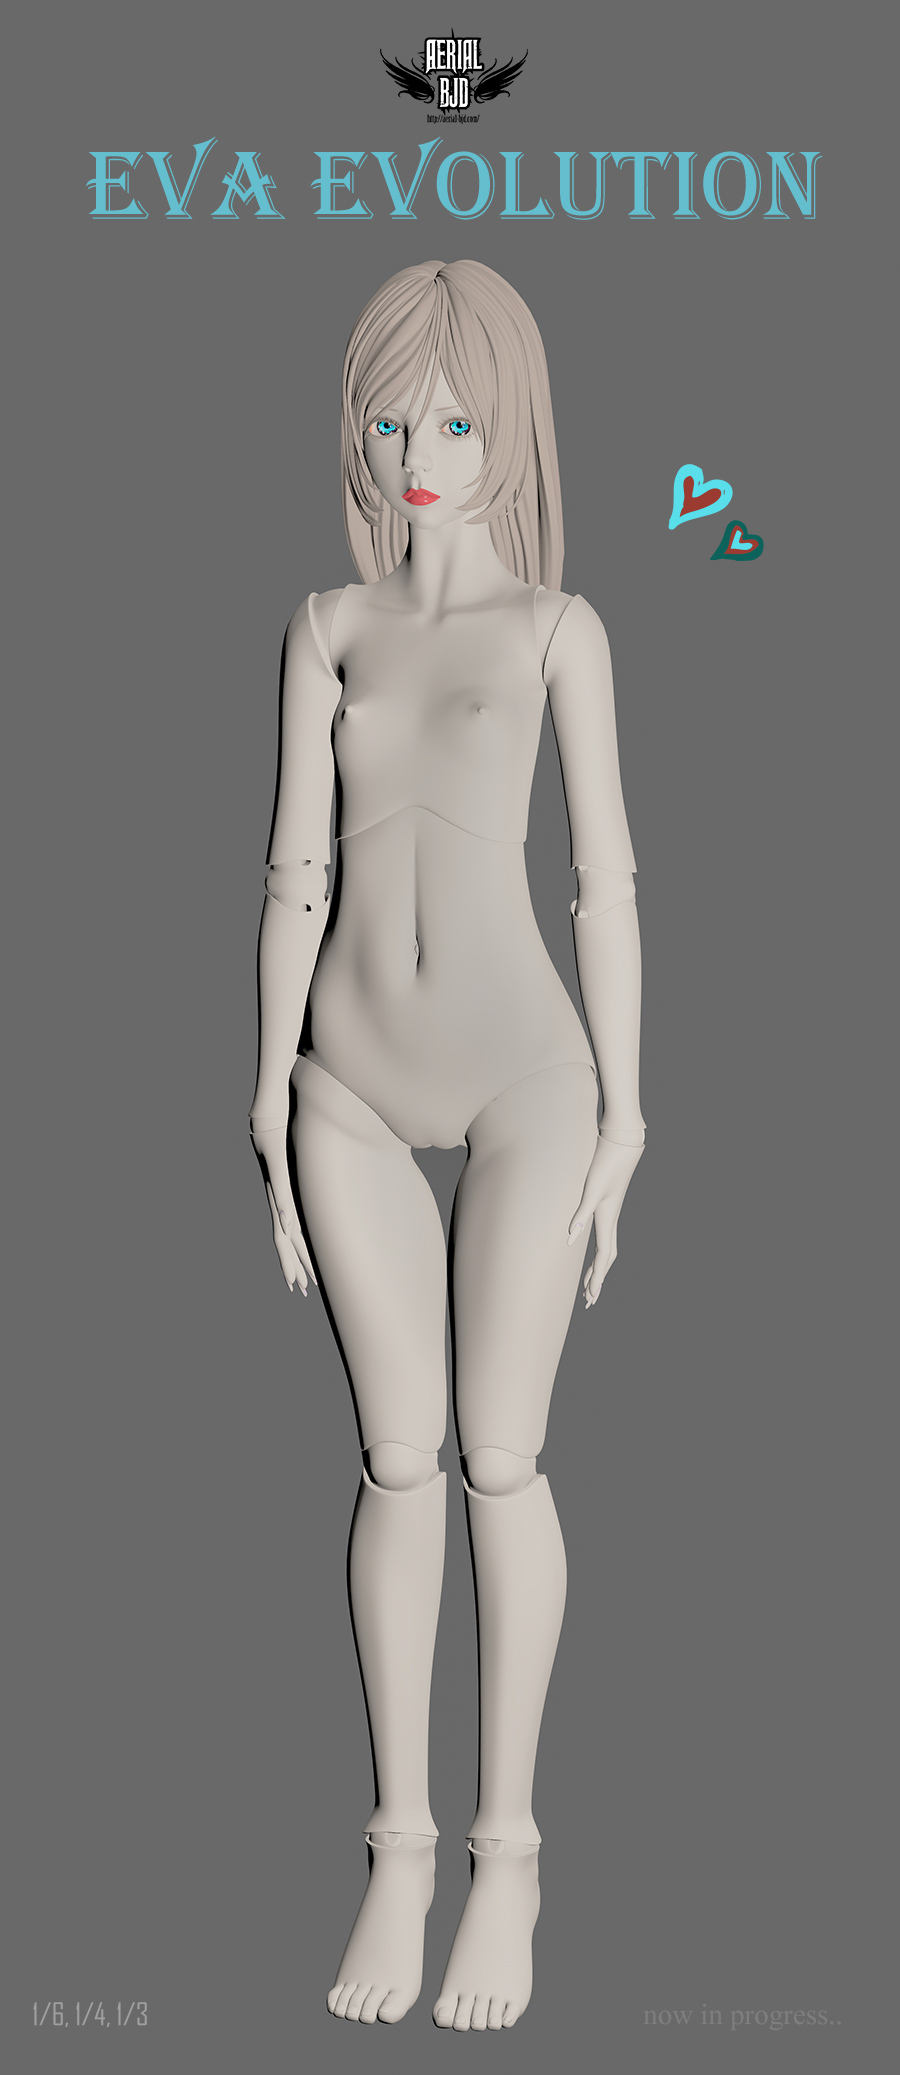 New Eva Evolution 3D Design.